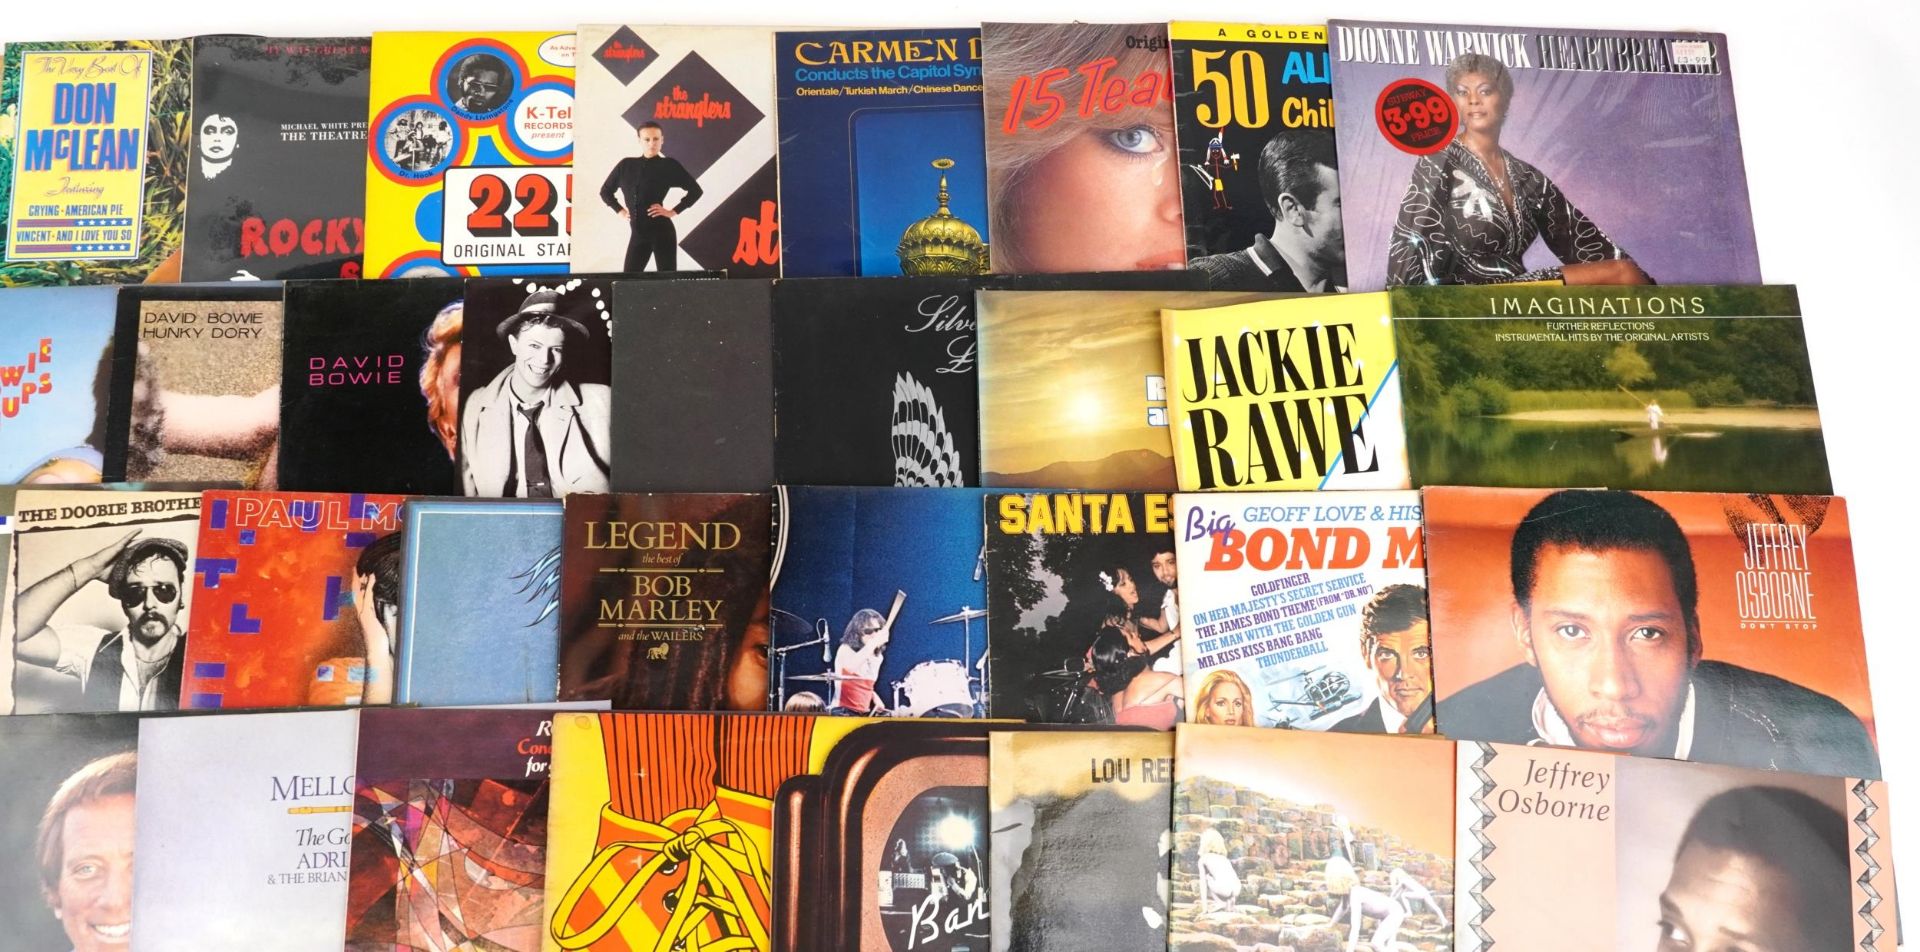 Vinyl LP records including The Eagles, Paul McCartney, The Doobie Brothers, David Bowie, Elton John, - Image 3 of 5